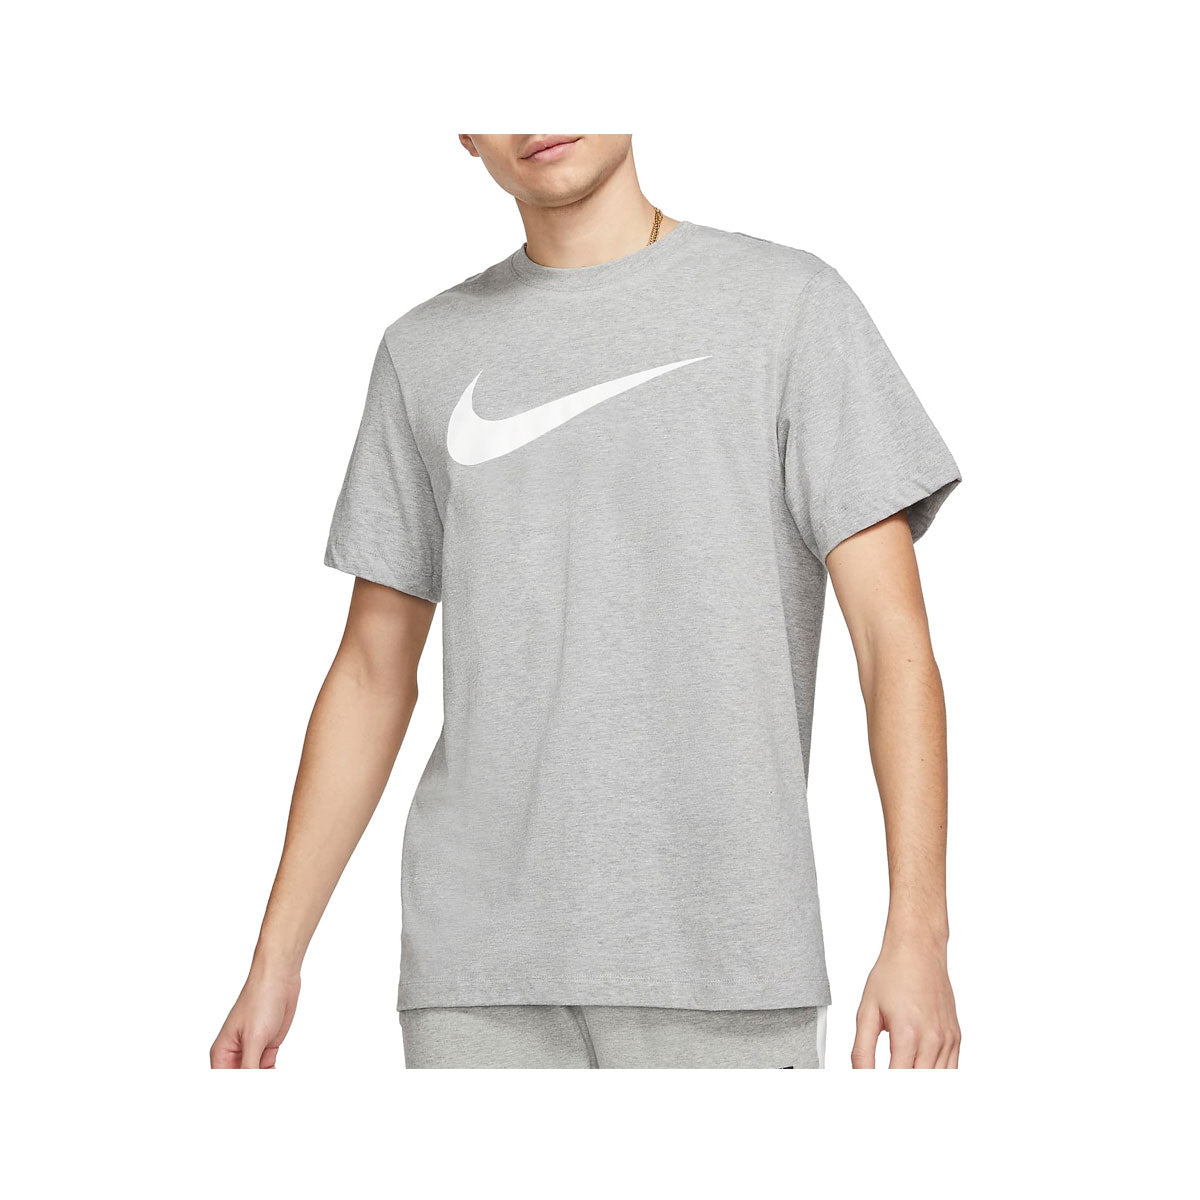 Nike Men's Sportswear SwooshT-Shirt